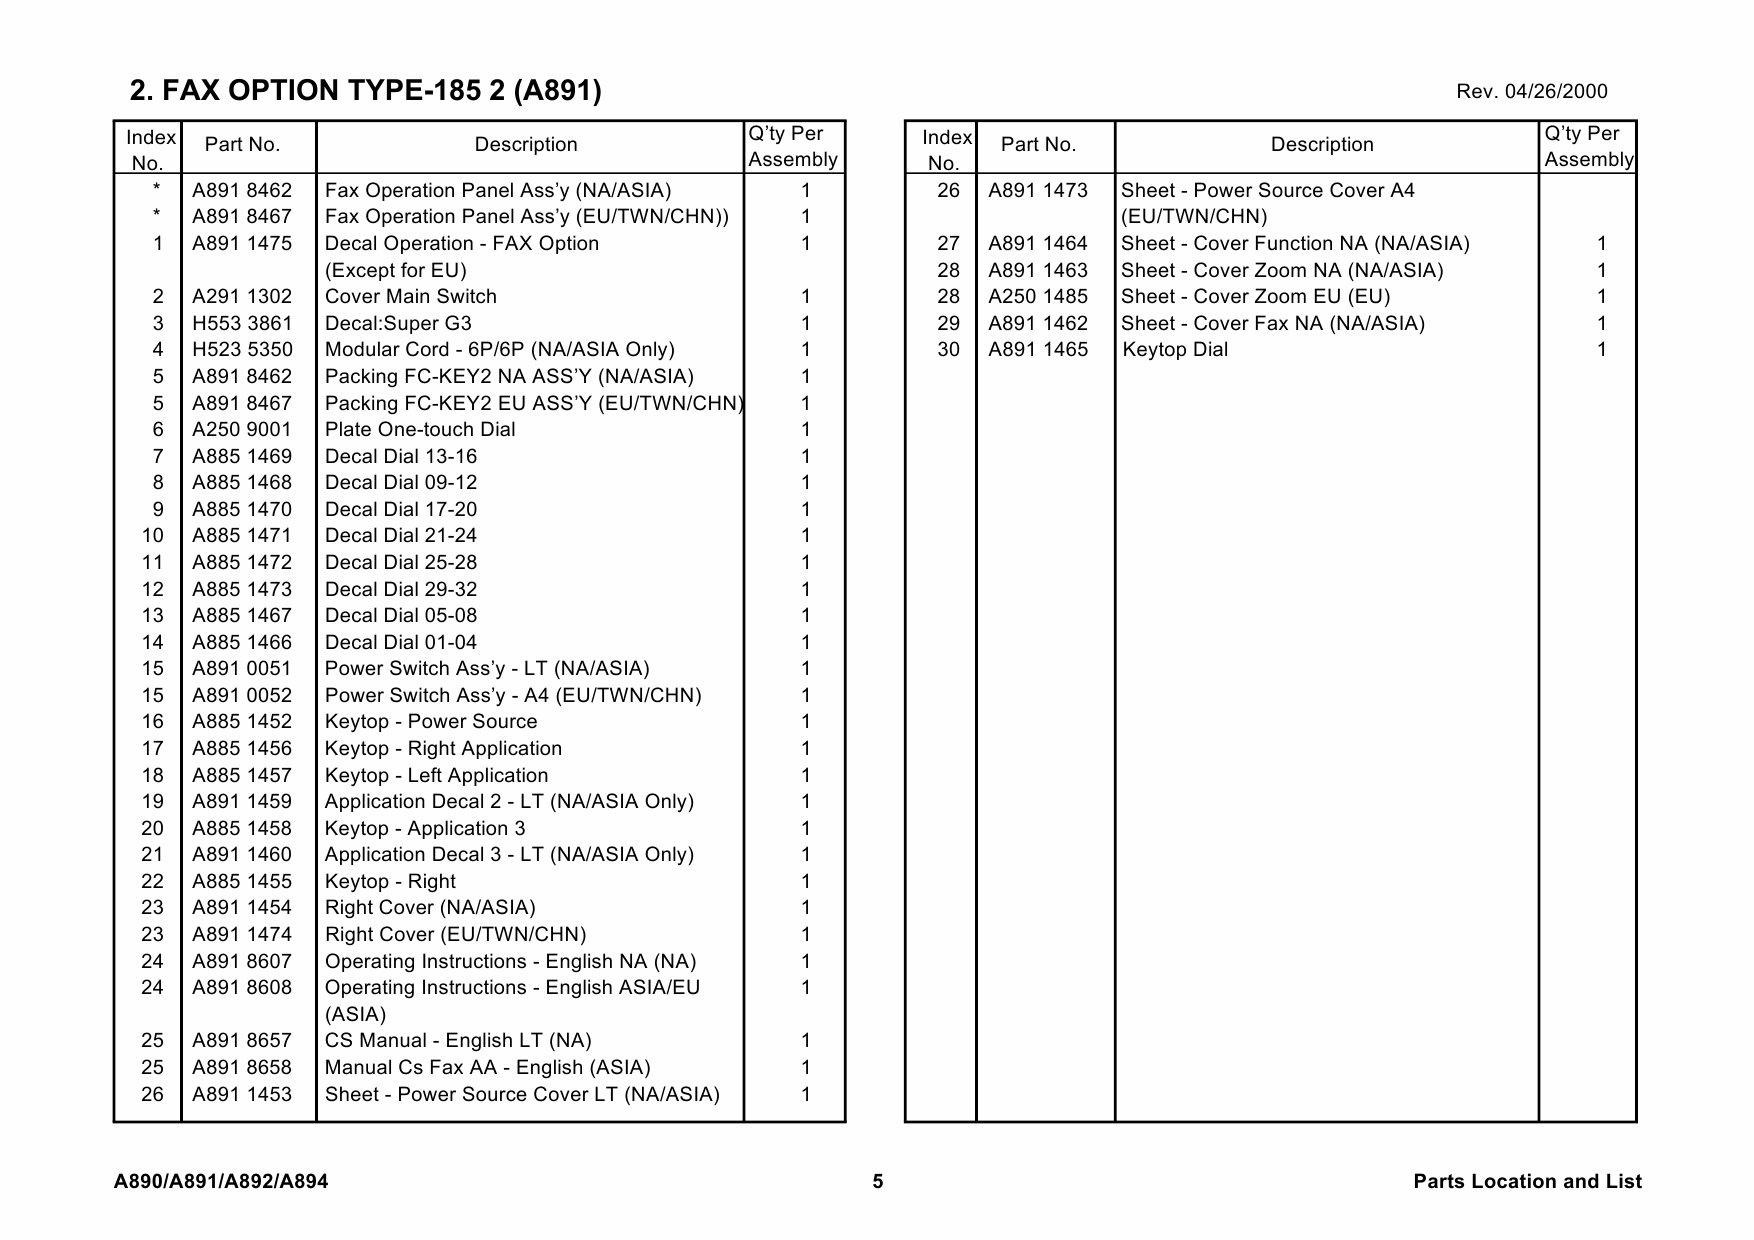 RICOH Options A891 Fax-option-type-185 Parts Catalog PDF download-2